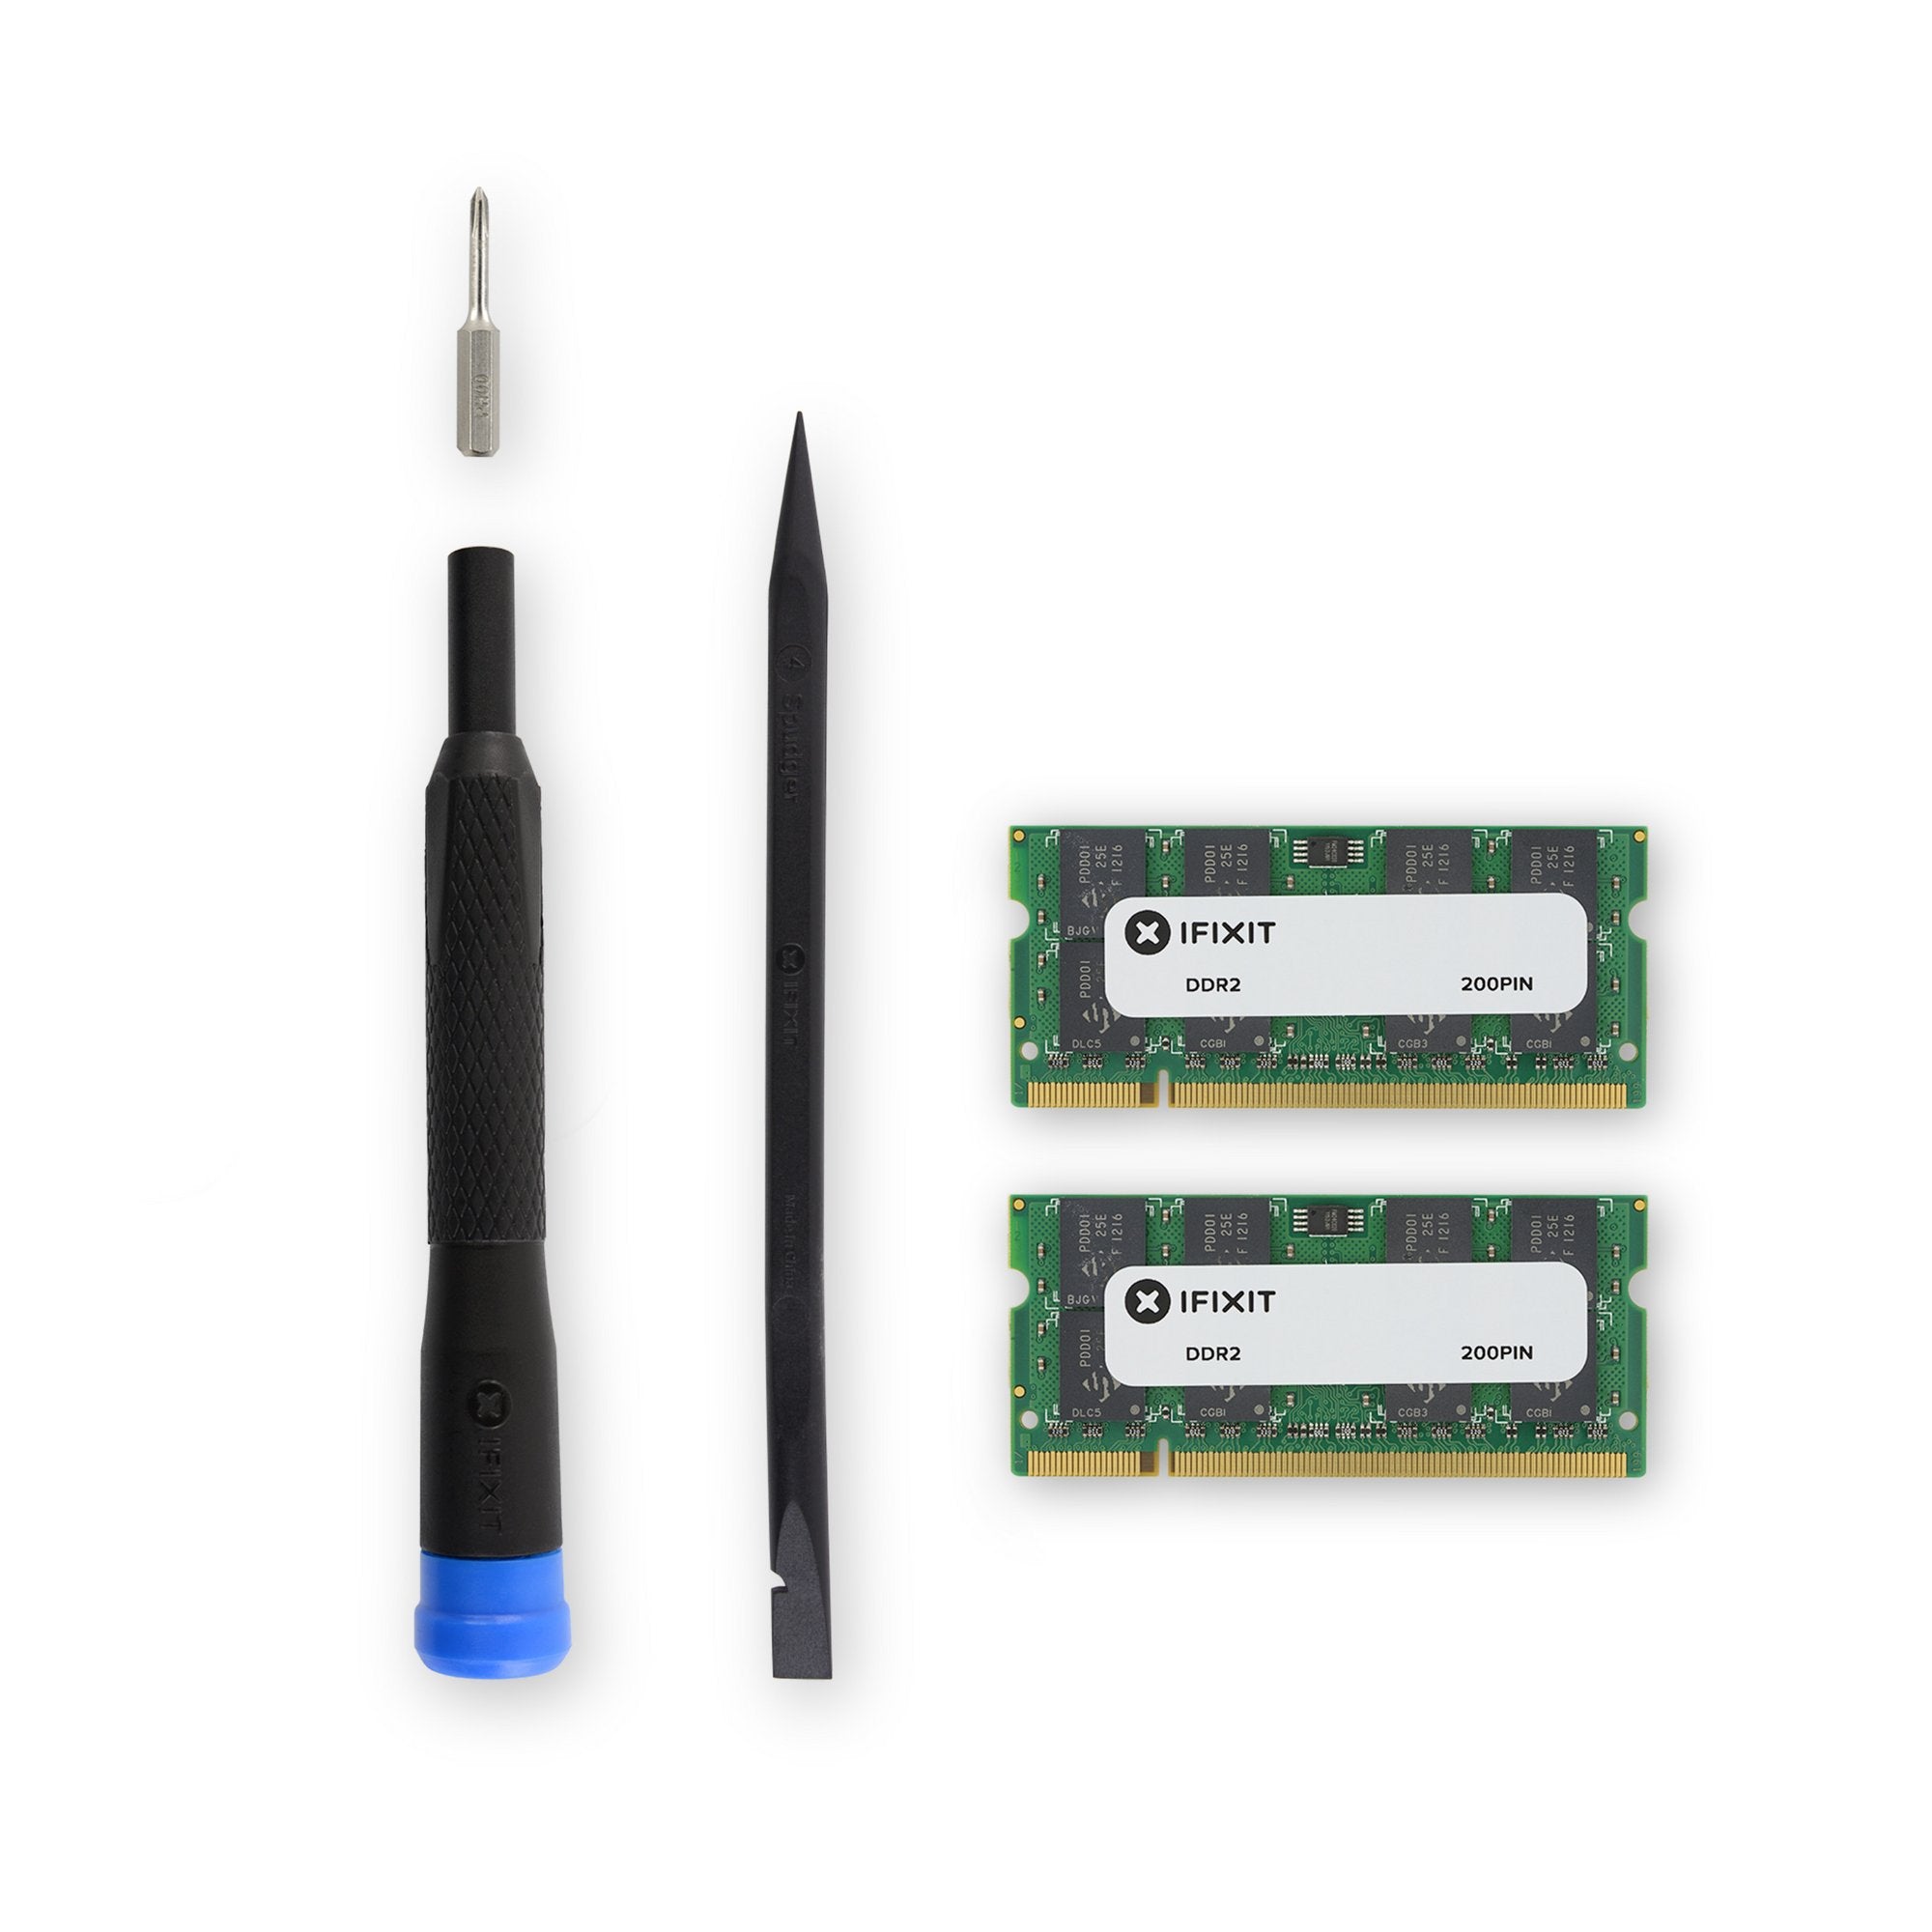 MacBook Pro 17" Model A1212 Memory Maxxer RAM Upgrade Kit